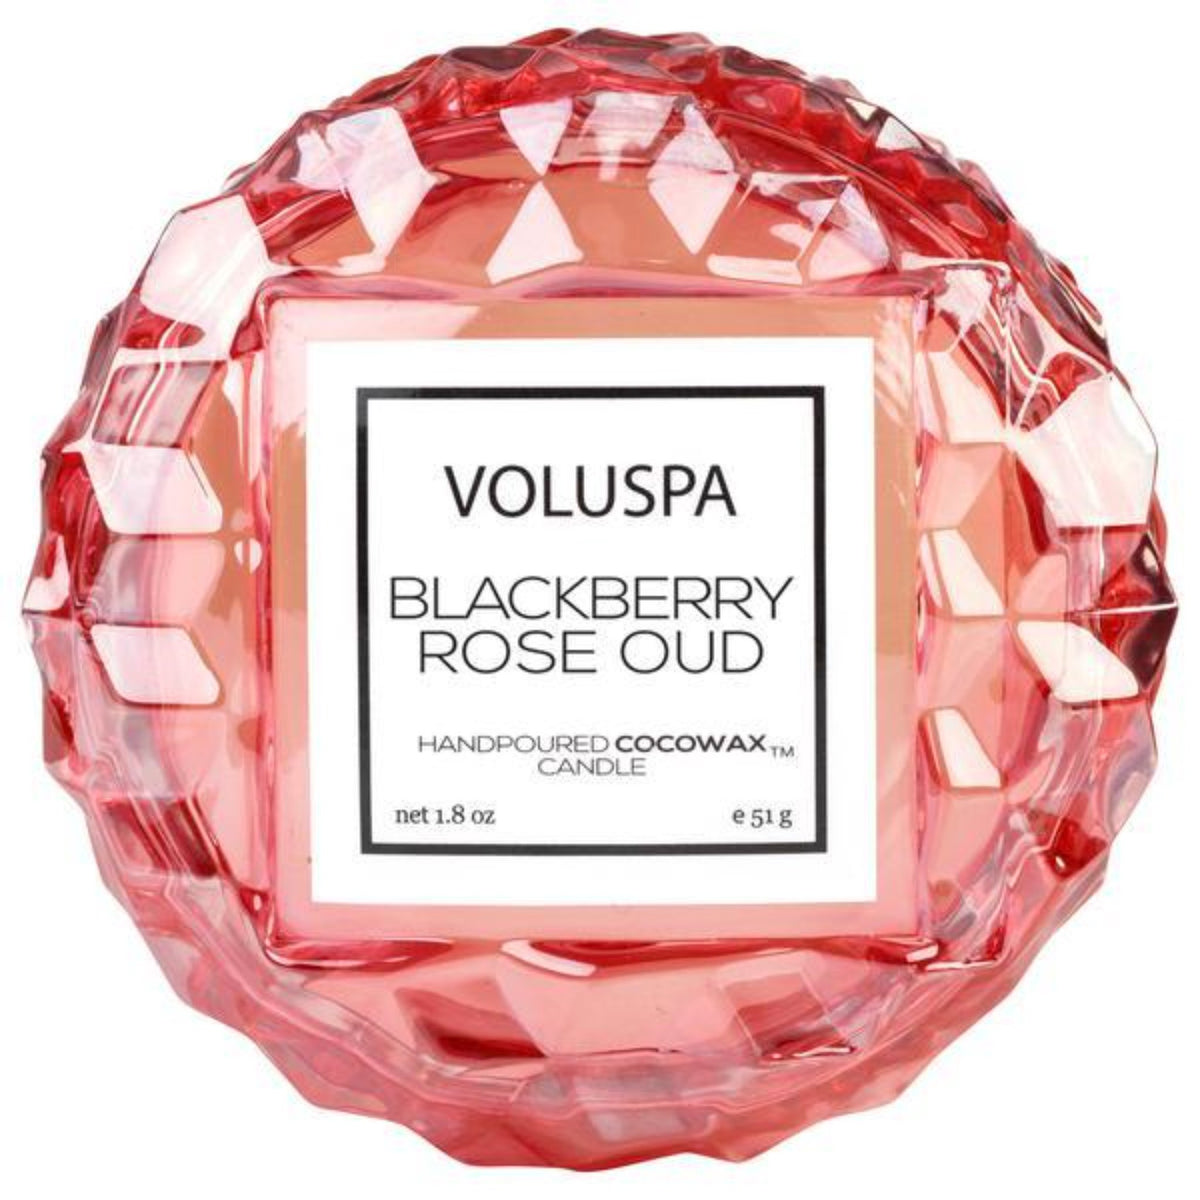 Voluspa: Blackberry Rose Oud Macaron Candle